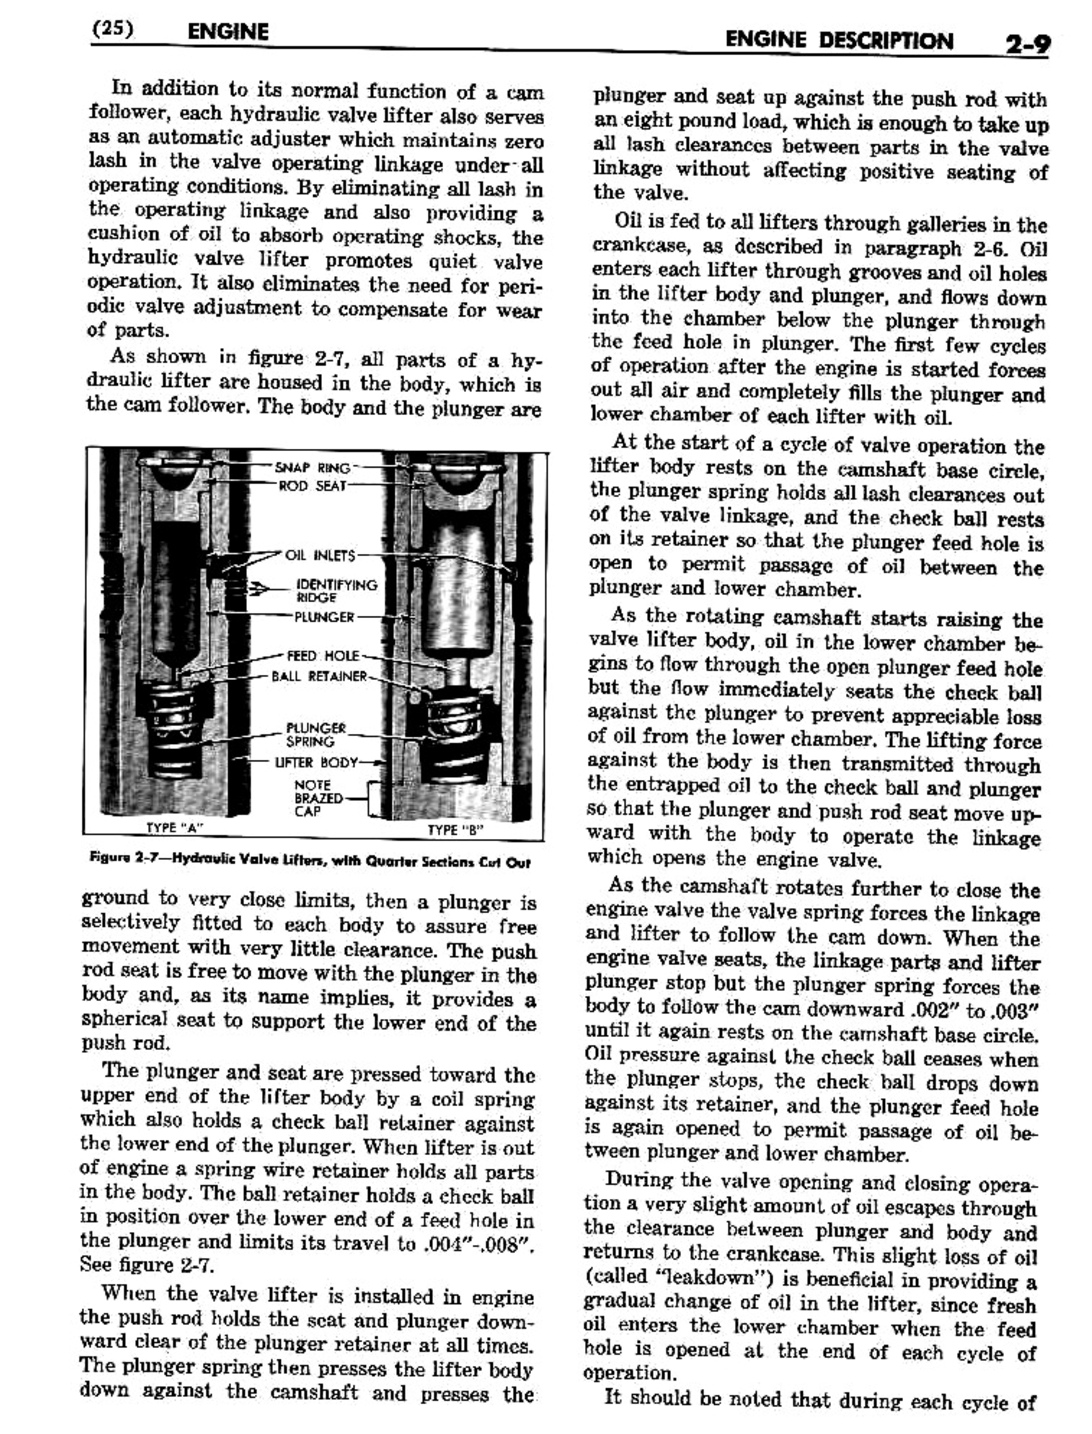 n_03 1956 Buick Shop Manual - Engine-009-009.jpg